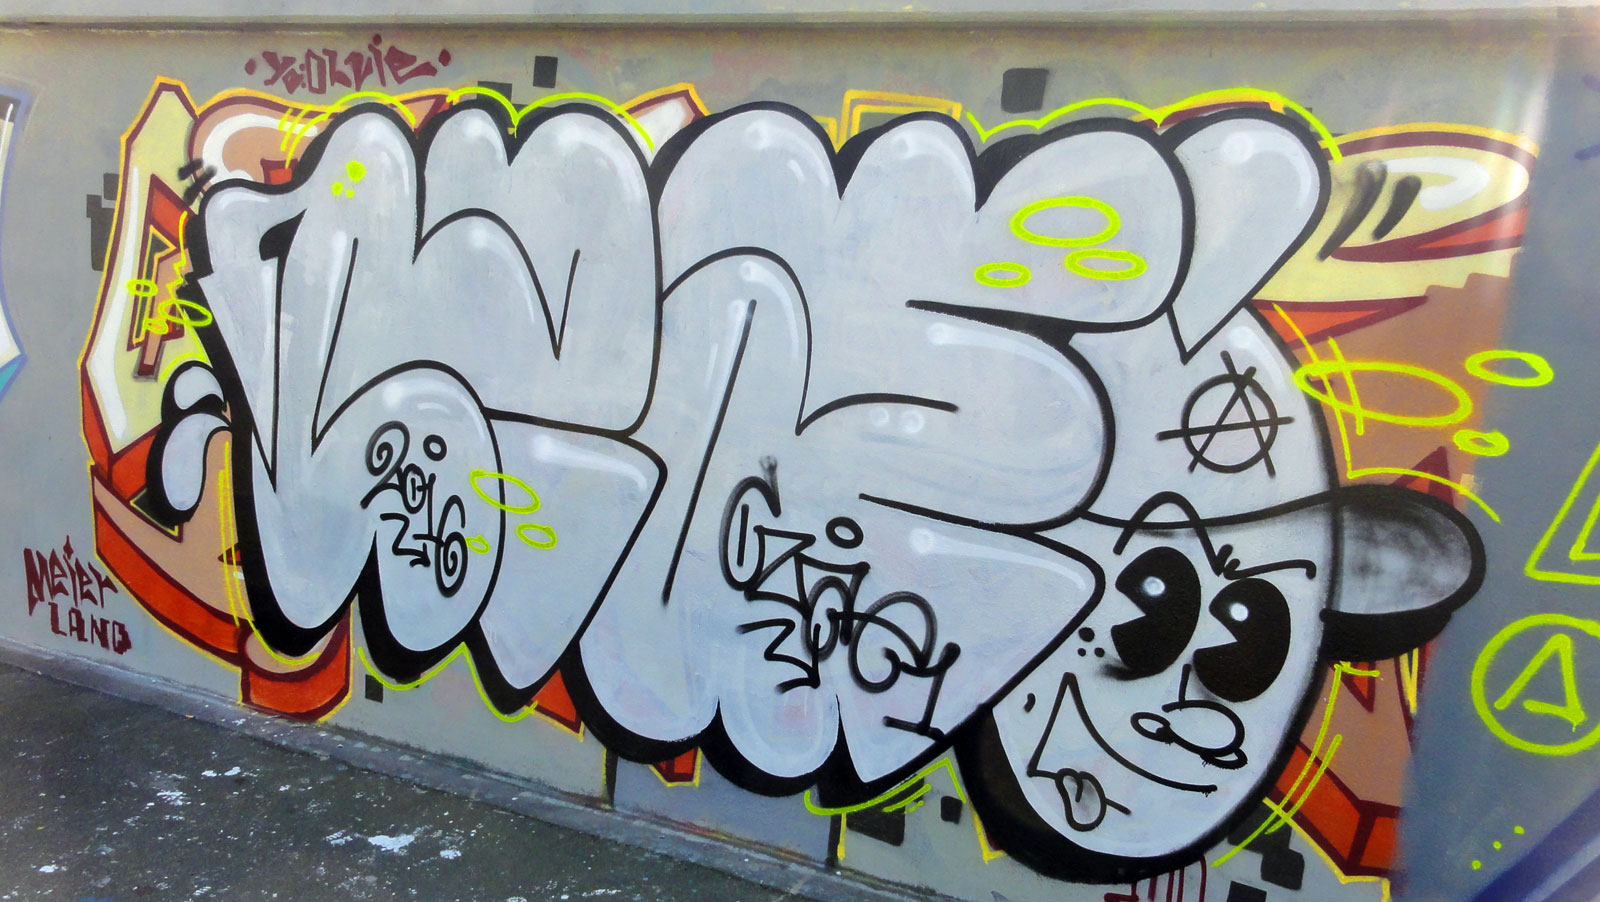 czae-1-graffiti-hanauer-landstrasse